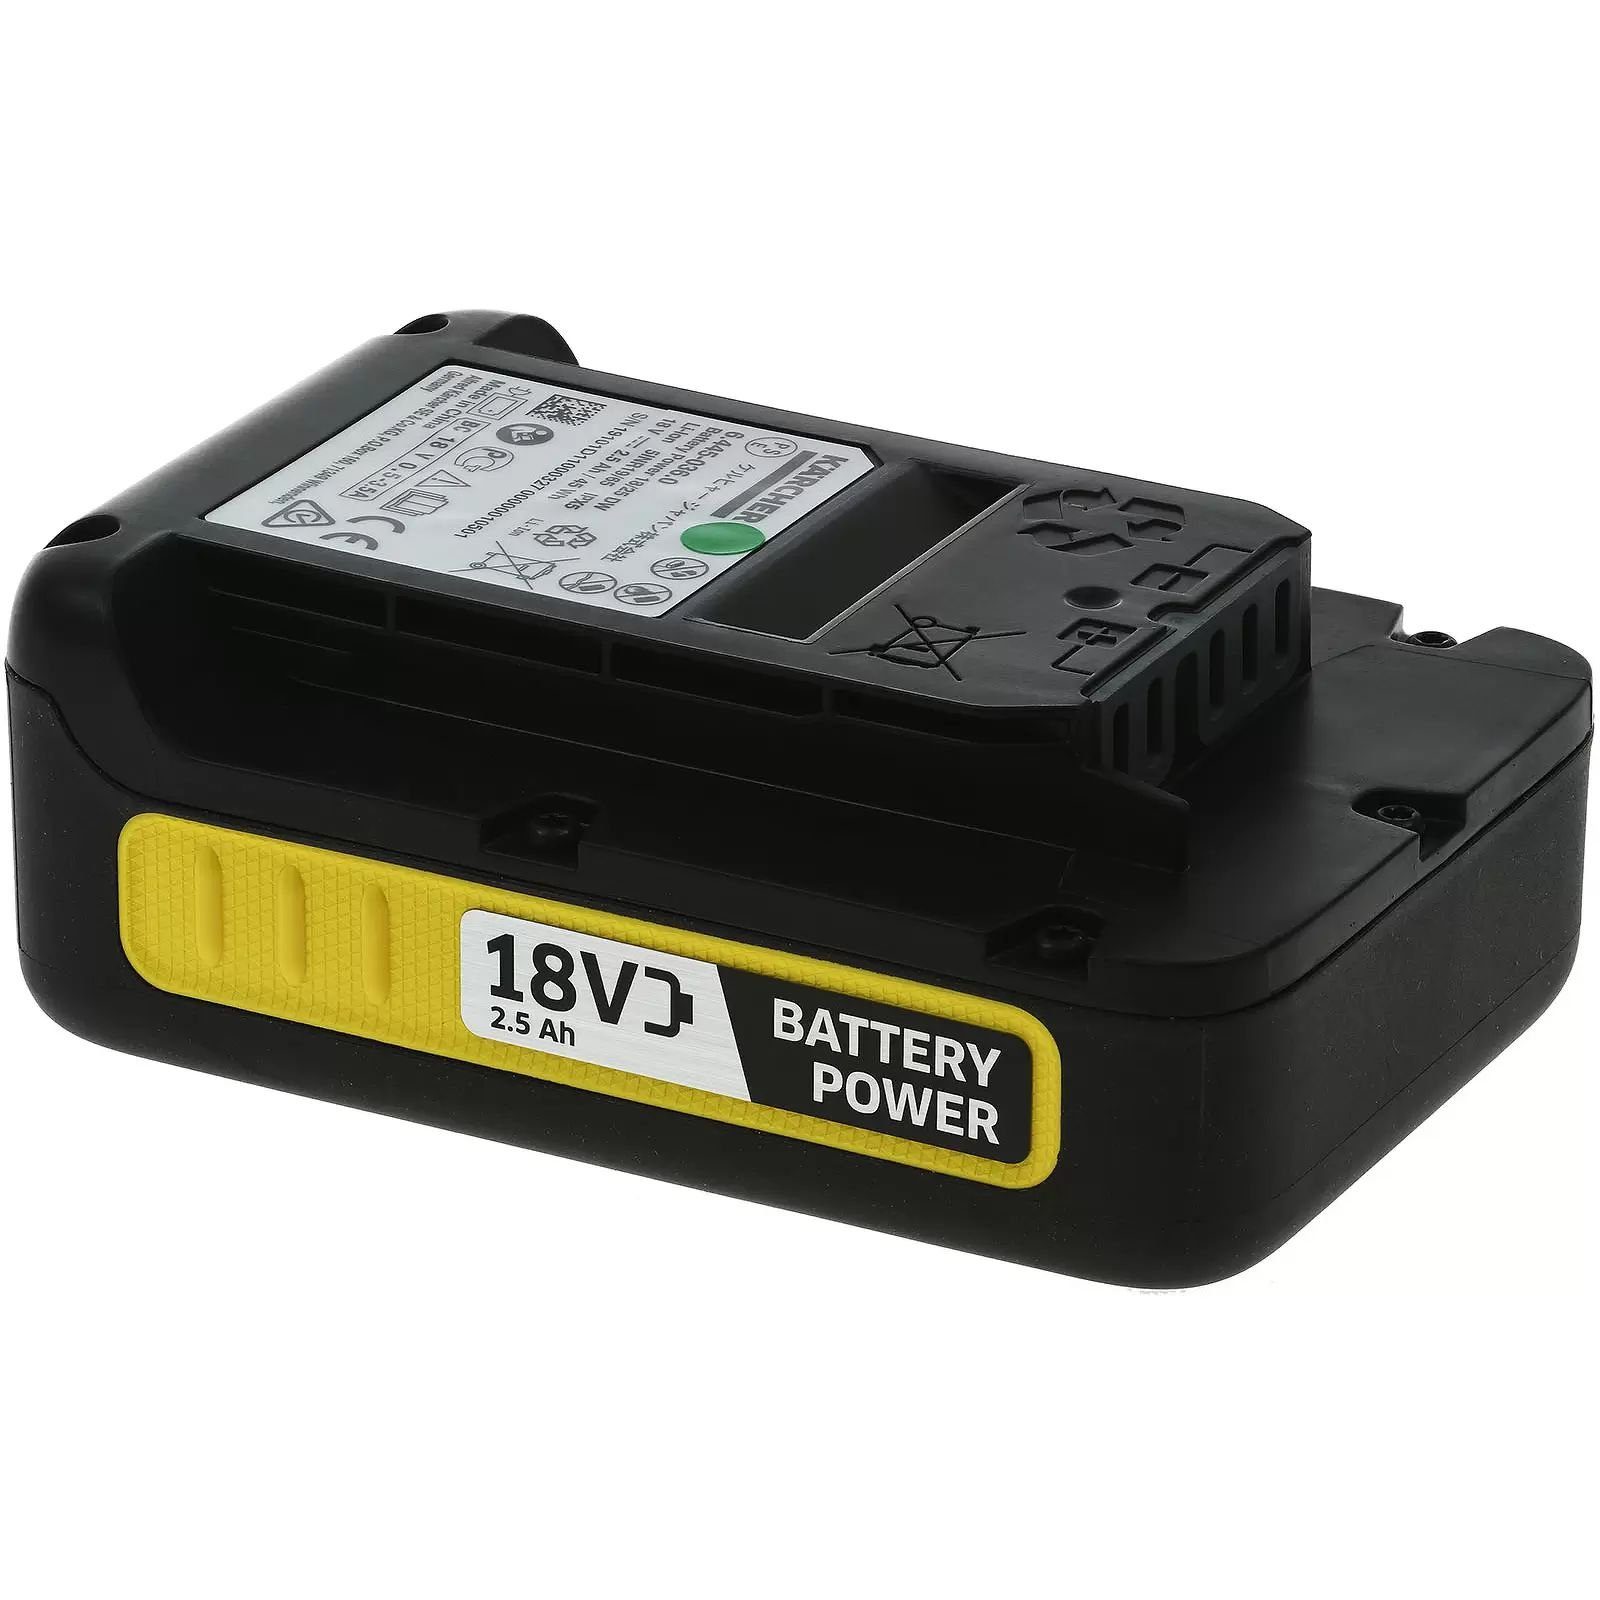 KÄRCHER Kärcher Akku Battery Power 18/25 für alle Geräte der Kärcher 18V  Batt Akku | Werkzeug-Ladegeräte